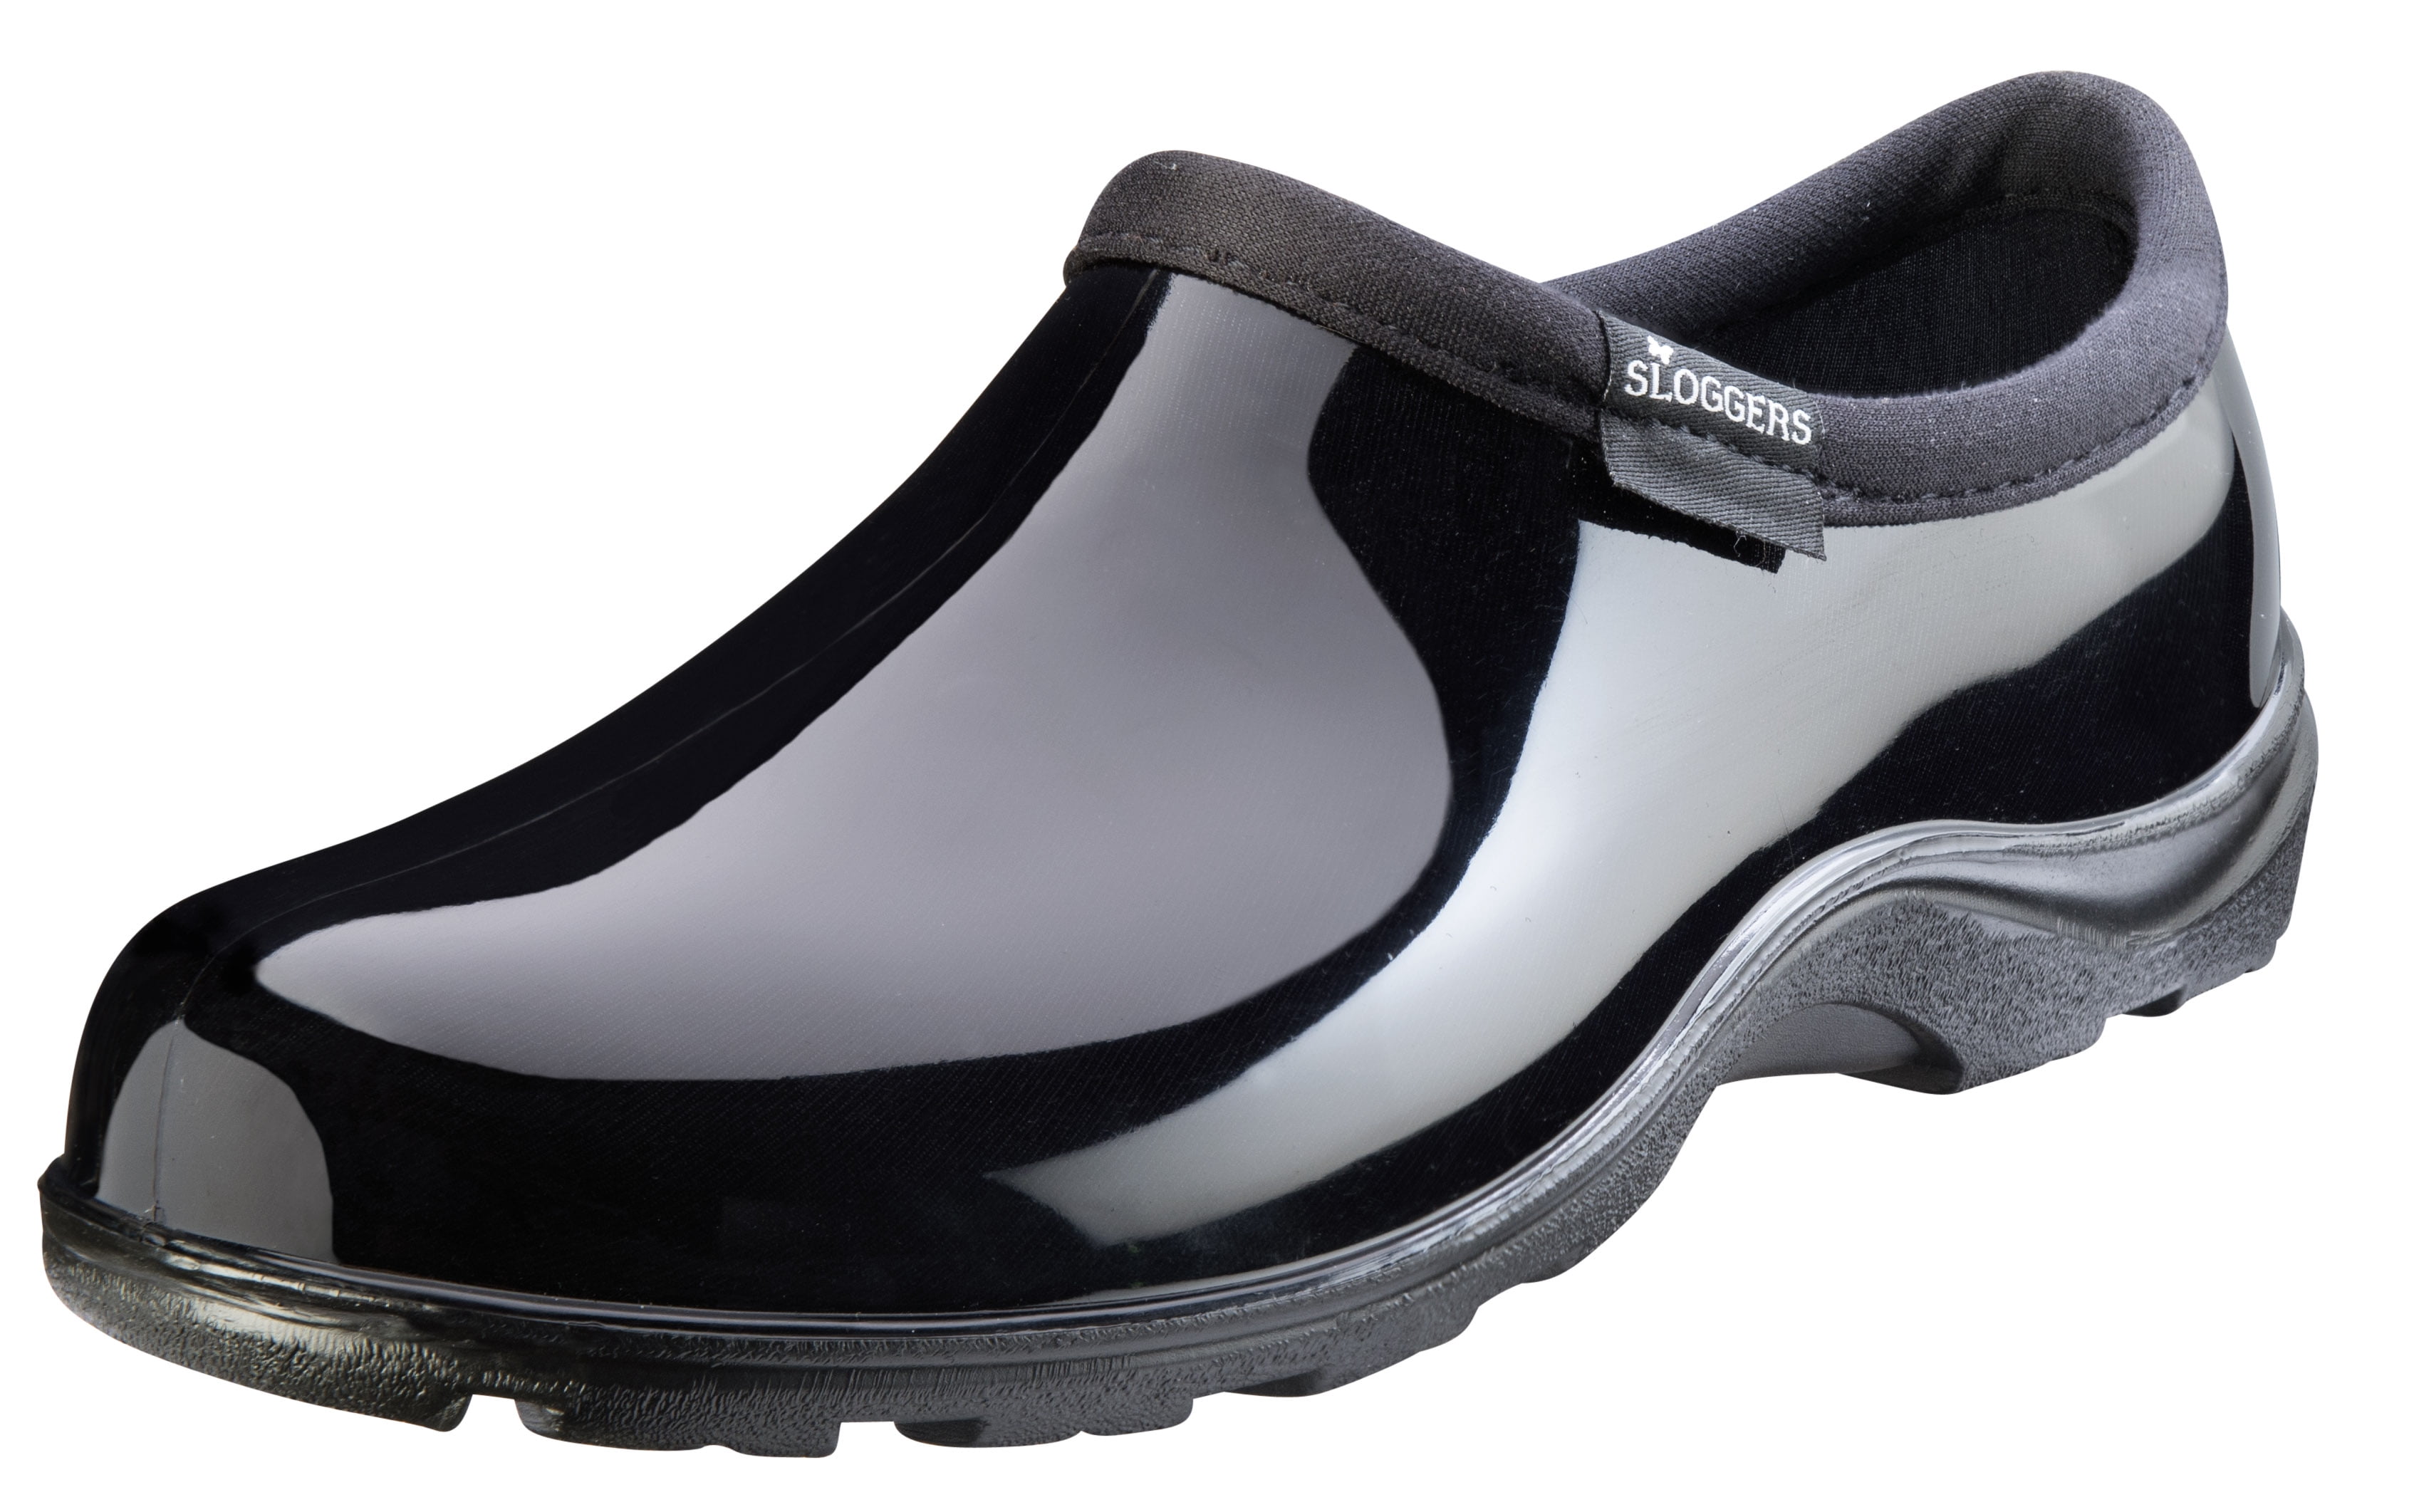 Sloggers 5102BK10 Womens Garden Shoe Midsummer Size 10 Black for sale online 